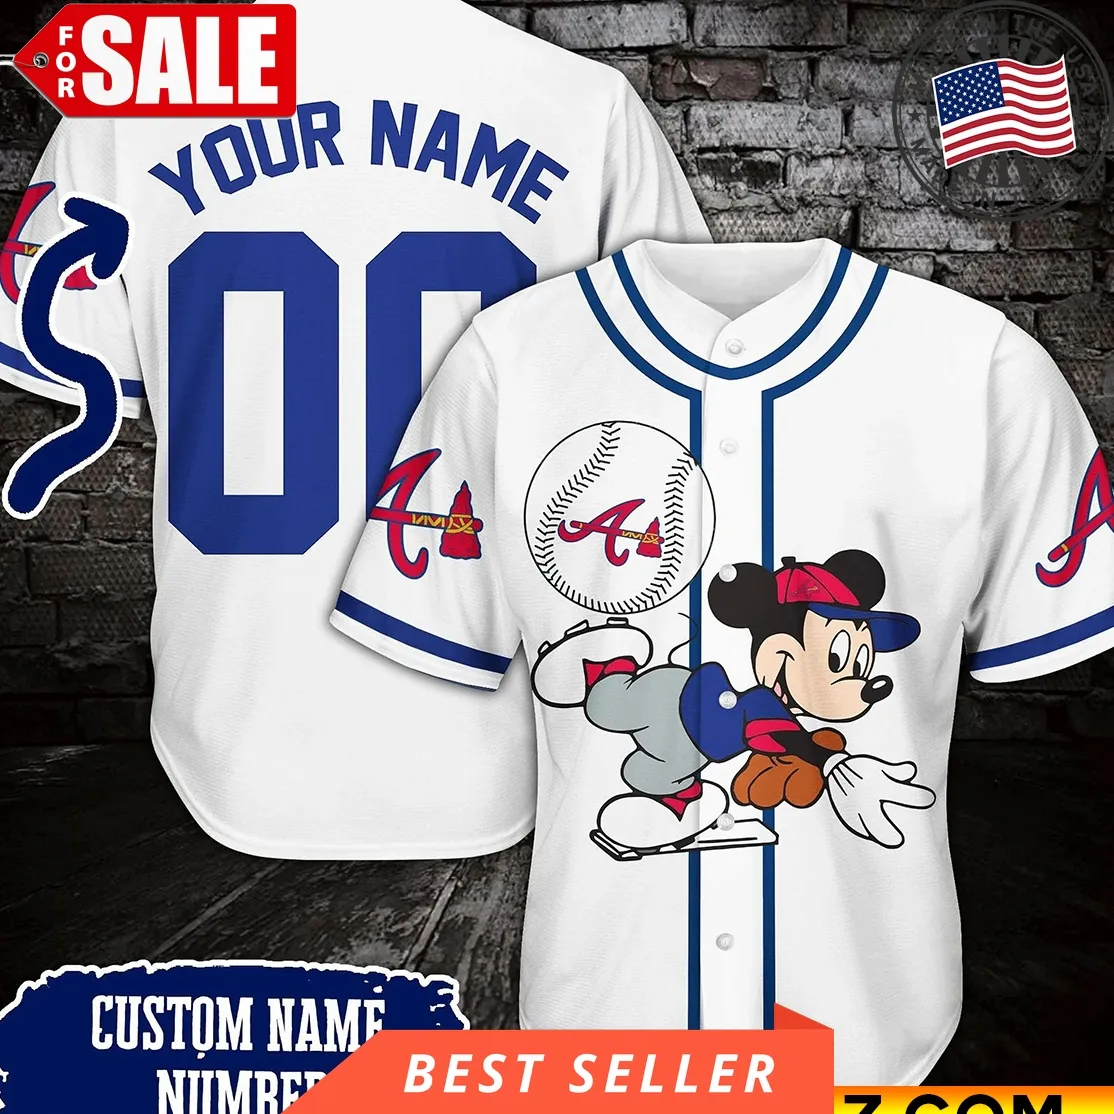 Bad Bunny Shirt Toronto Blue Jays Baseball Jersey Tee - Best Seller Shirts  Design In Usa